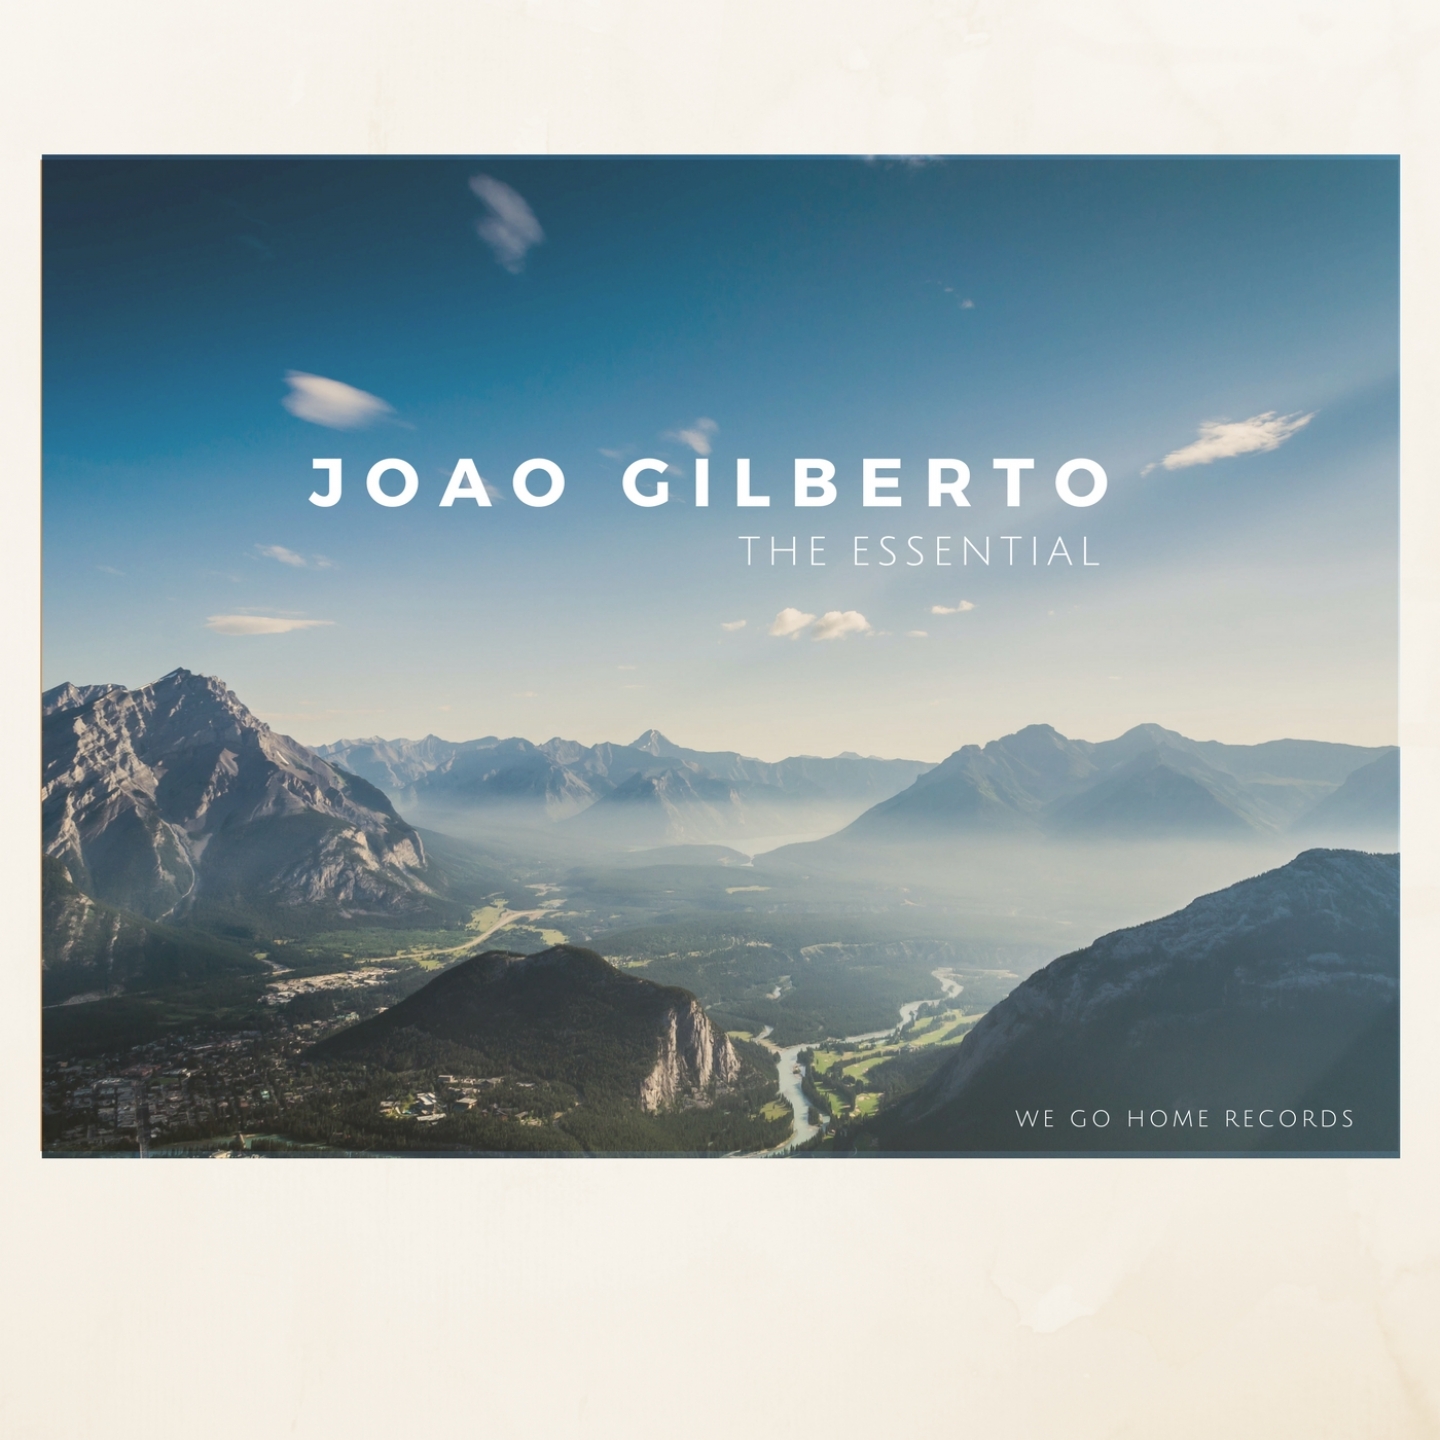 Joao Gilberto: The Essential